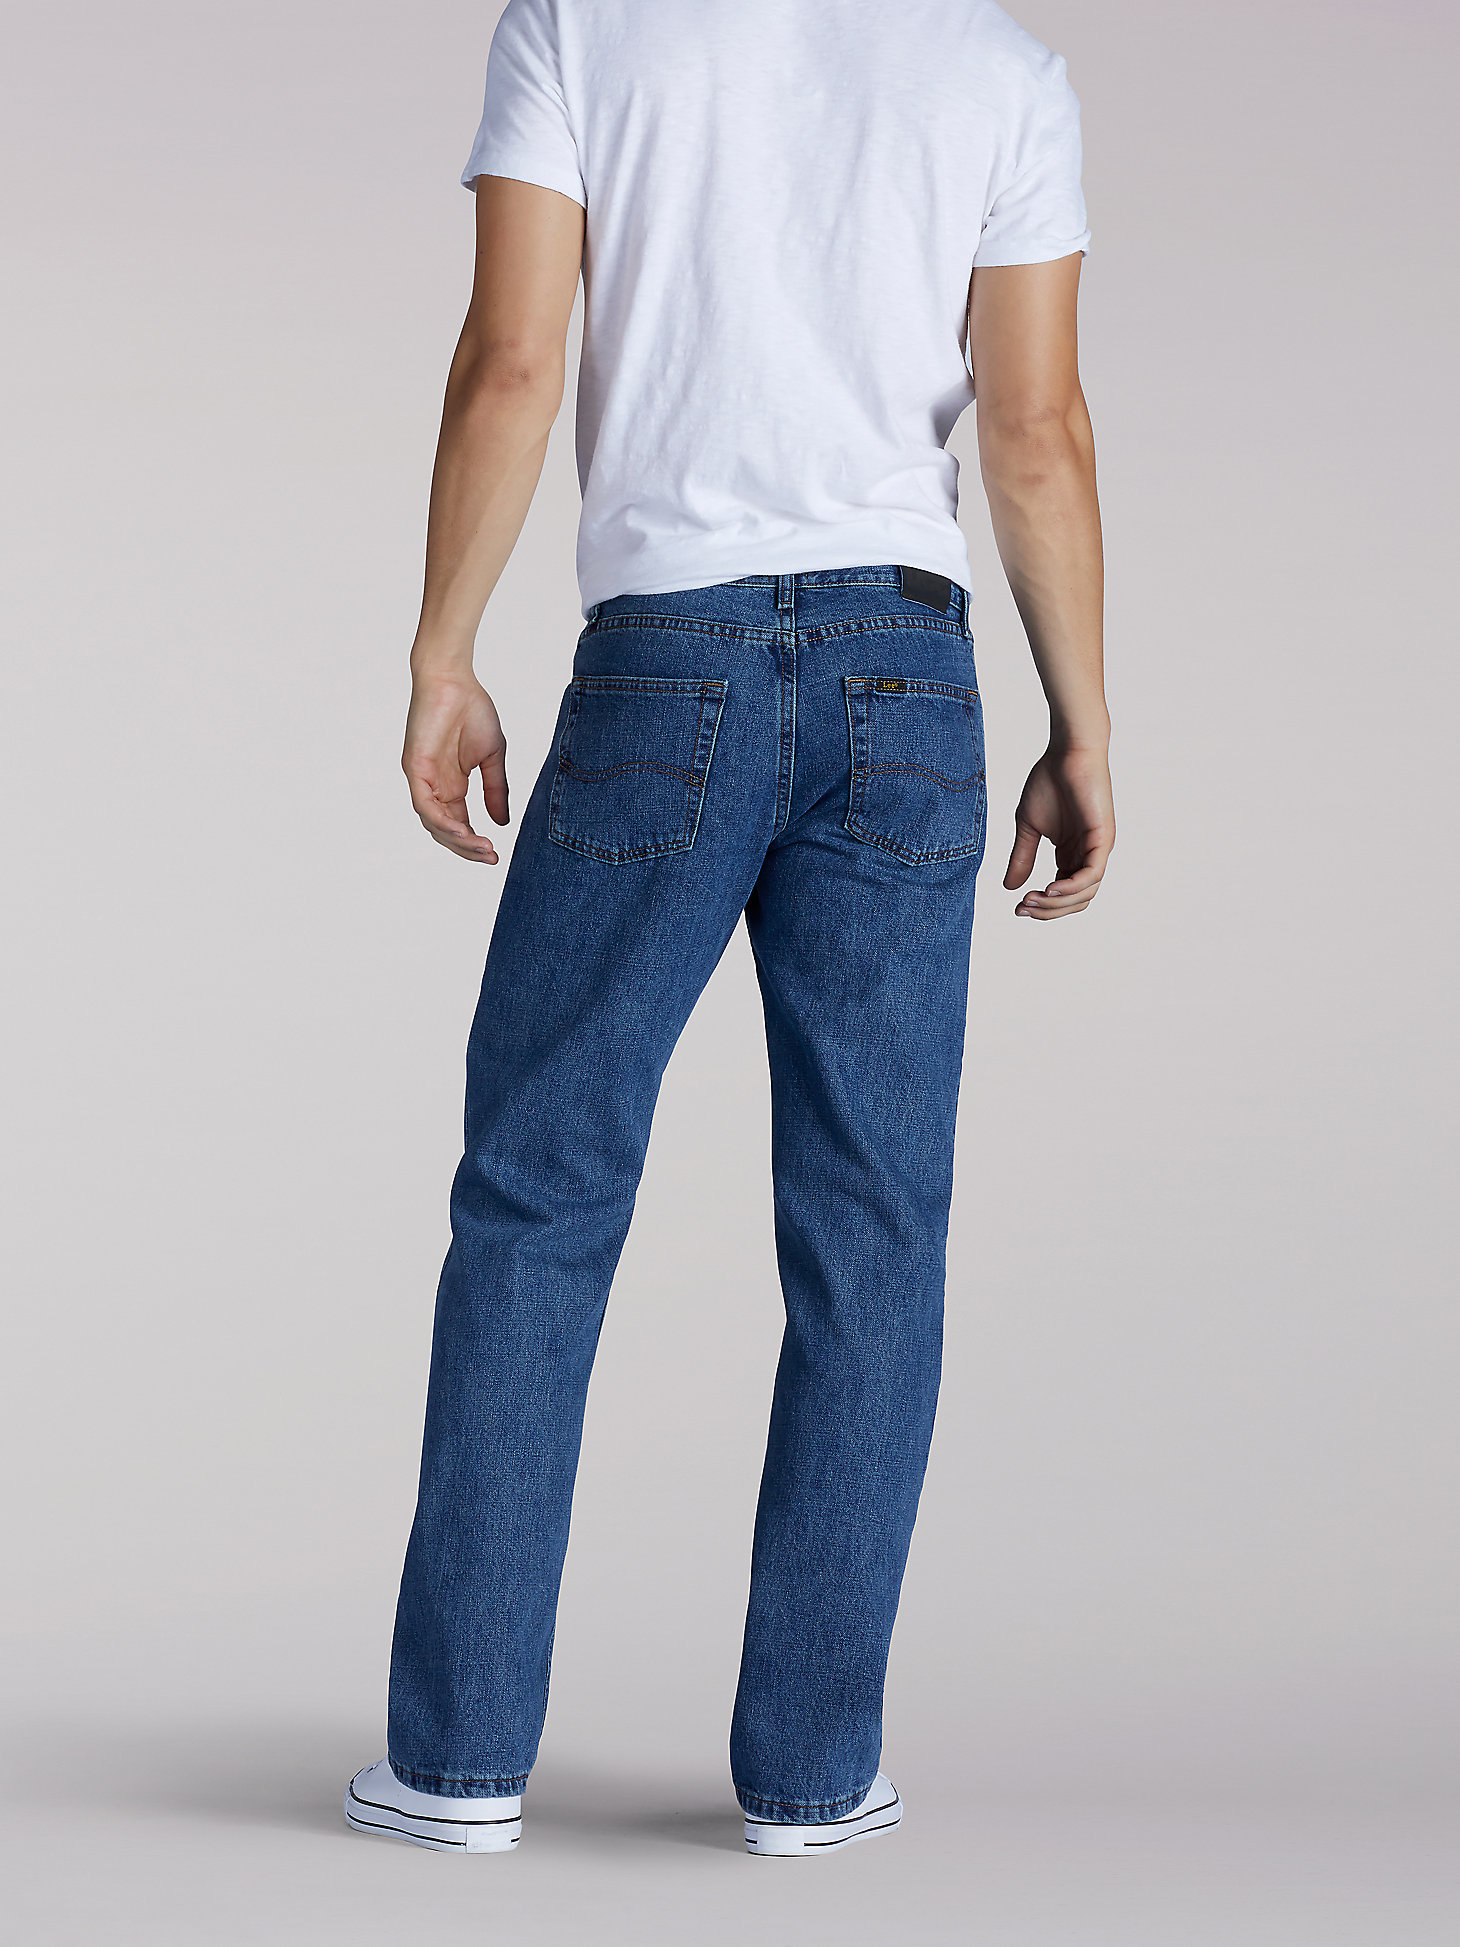 Men’s Regular Fit Bootcut Jeans in Wylie alternative view 1